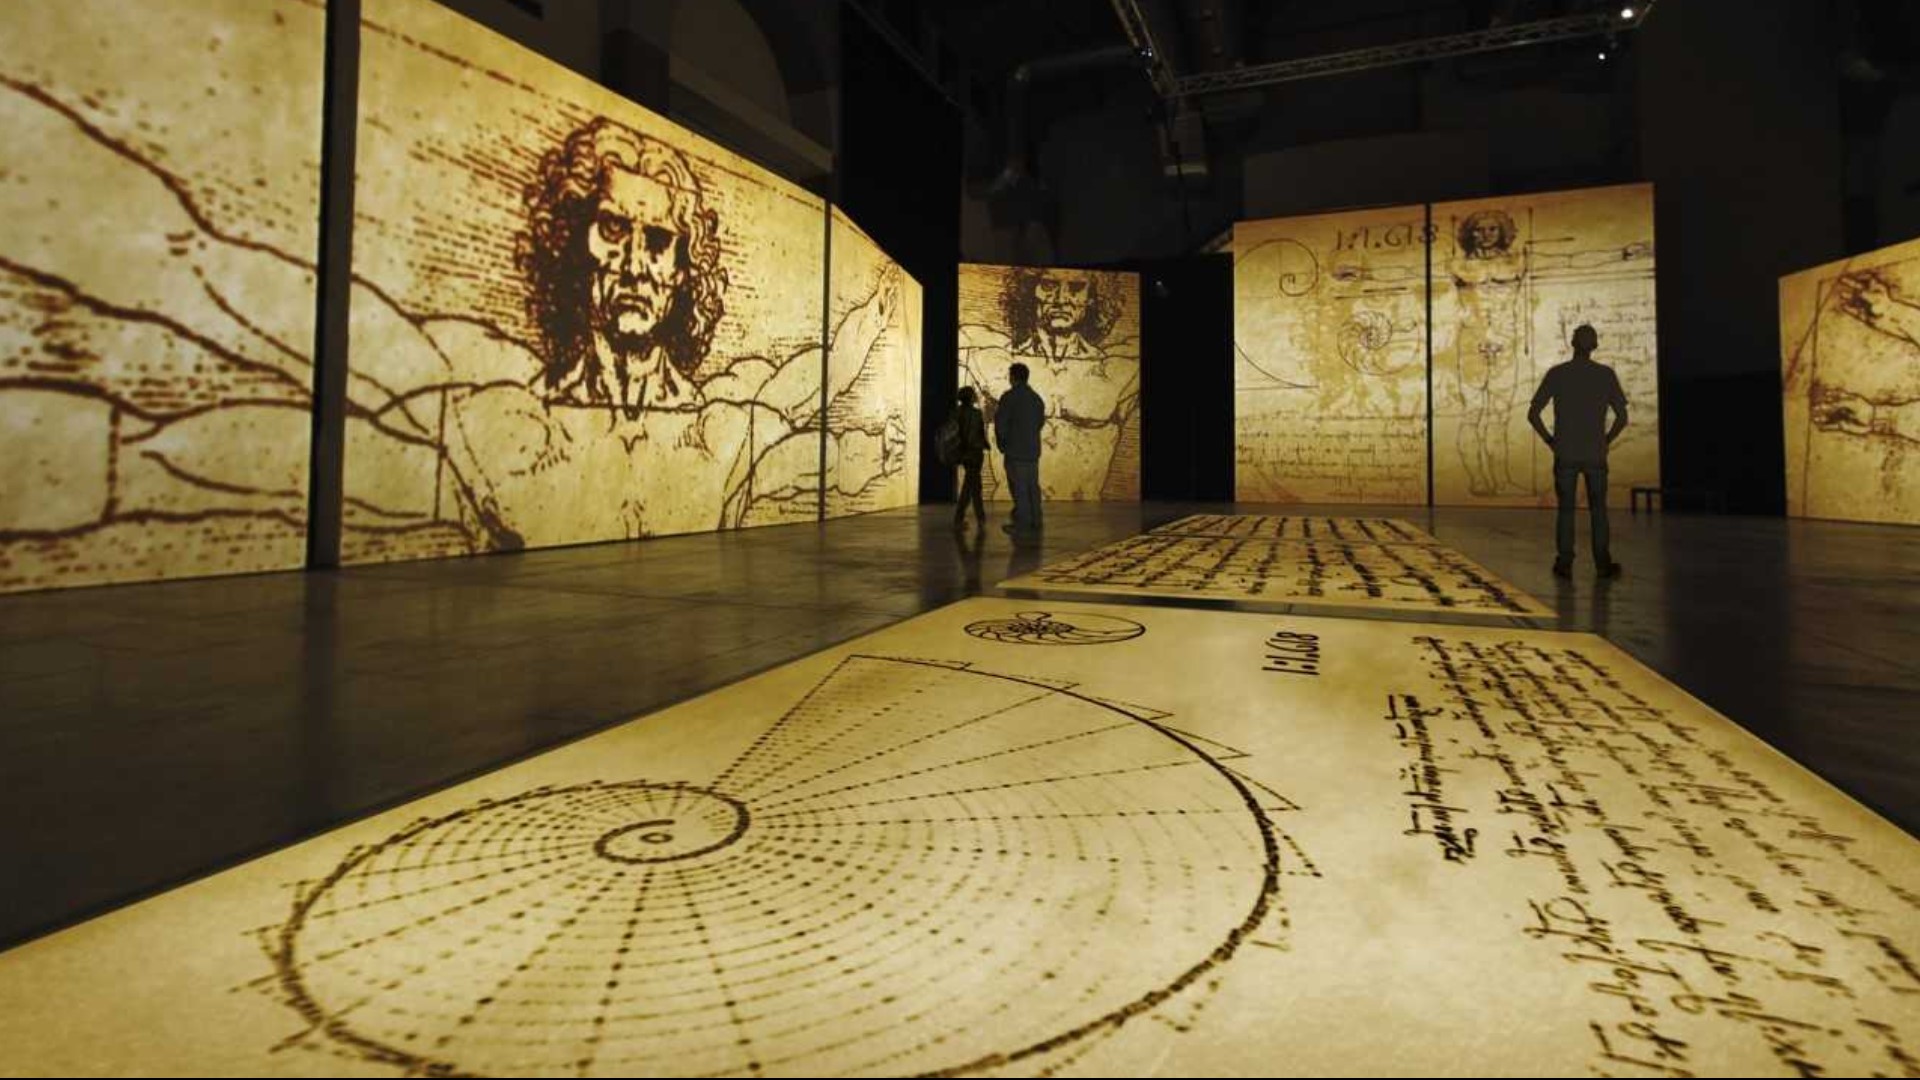 Leonardo da Vinci exhibition opens Friday in Denver